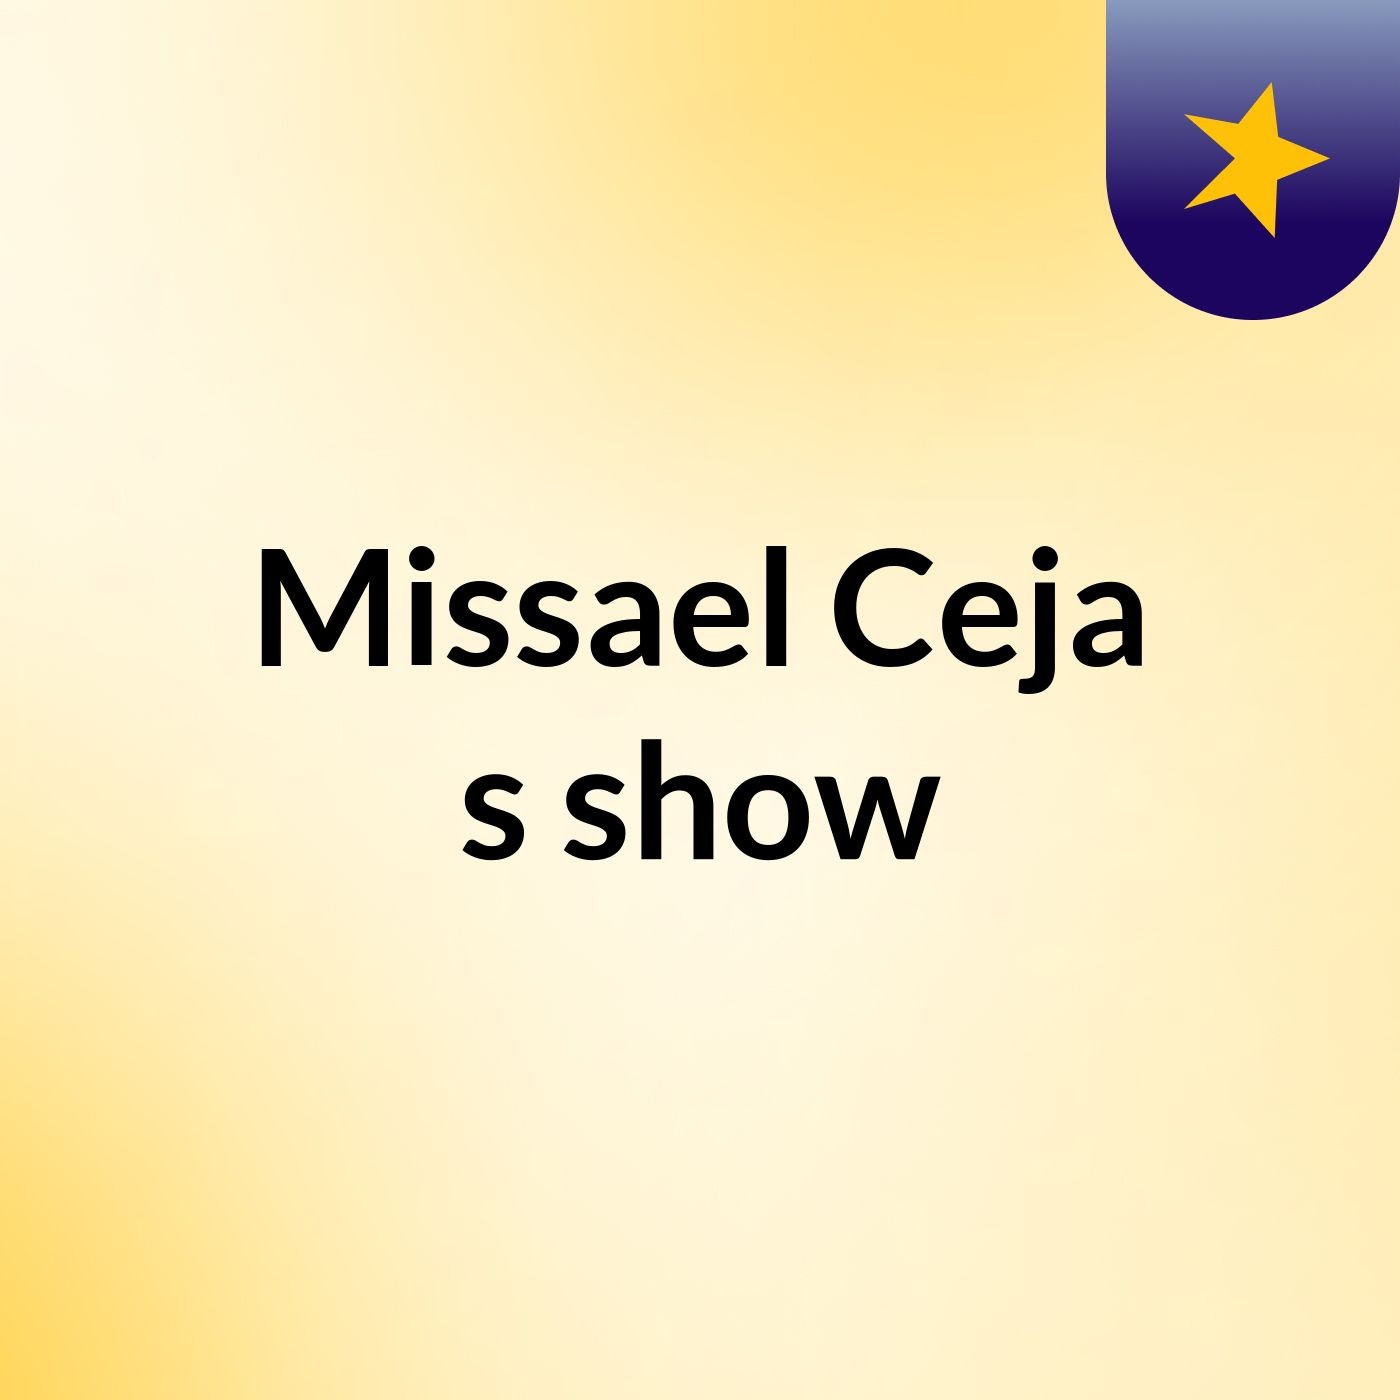 Missael Ceja's show